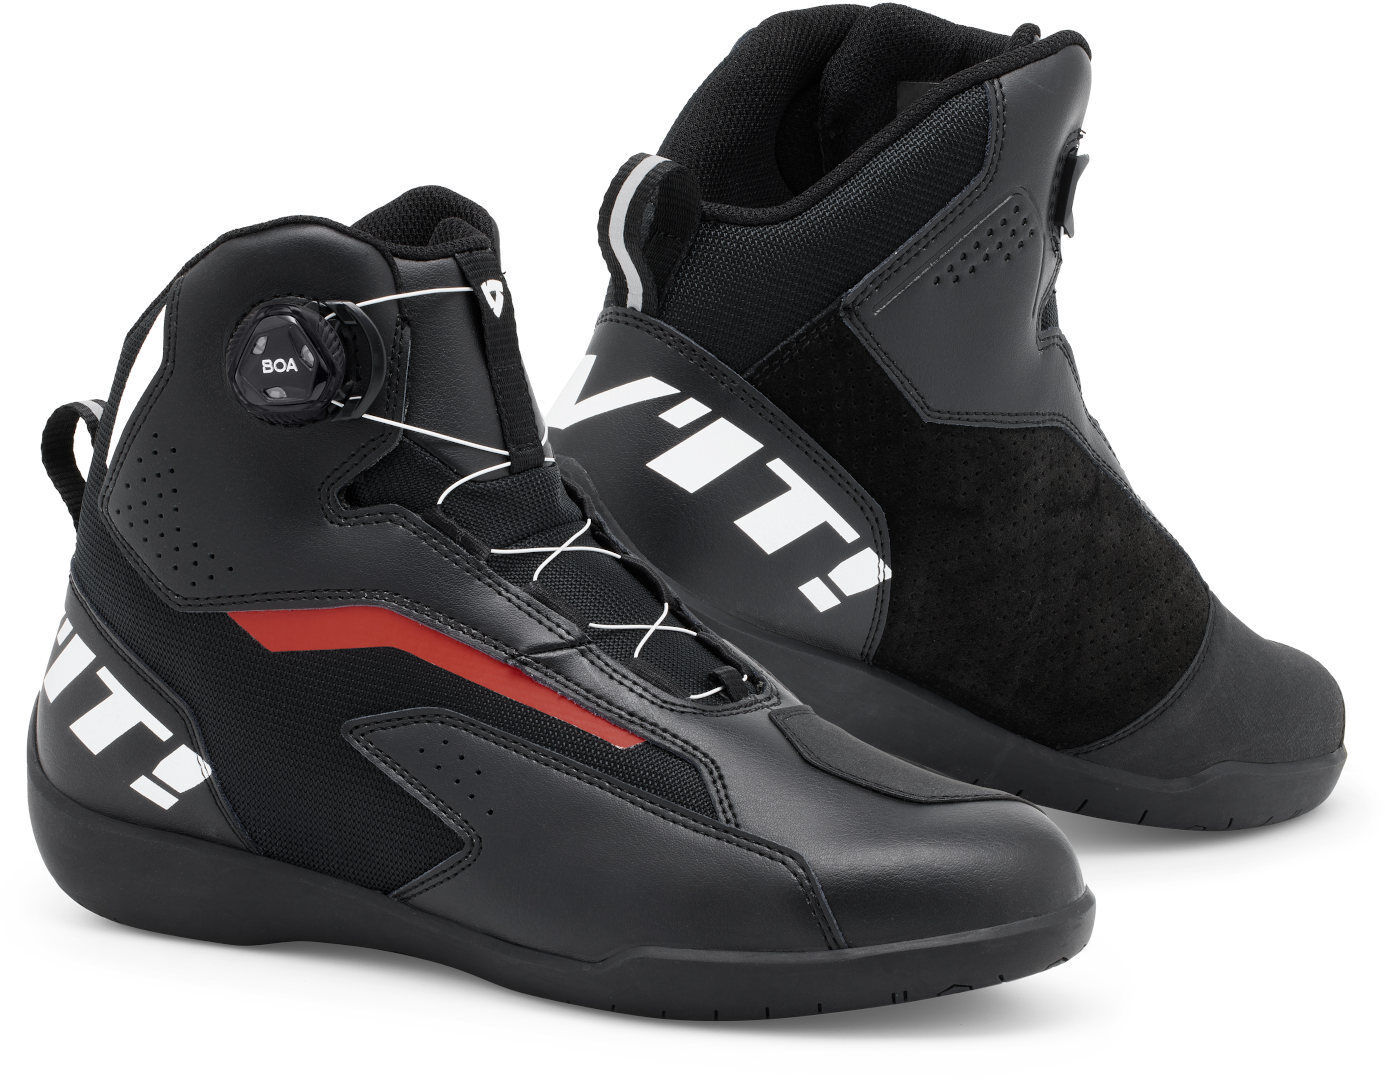 Revit Jetspeed Pro Zapatos de motocicleta - Negro Blanco Rojo (45)